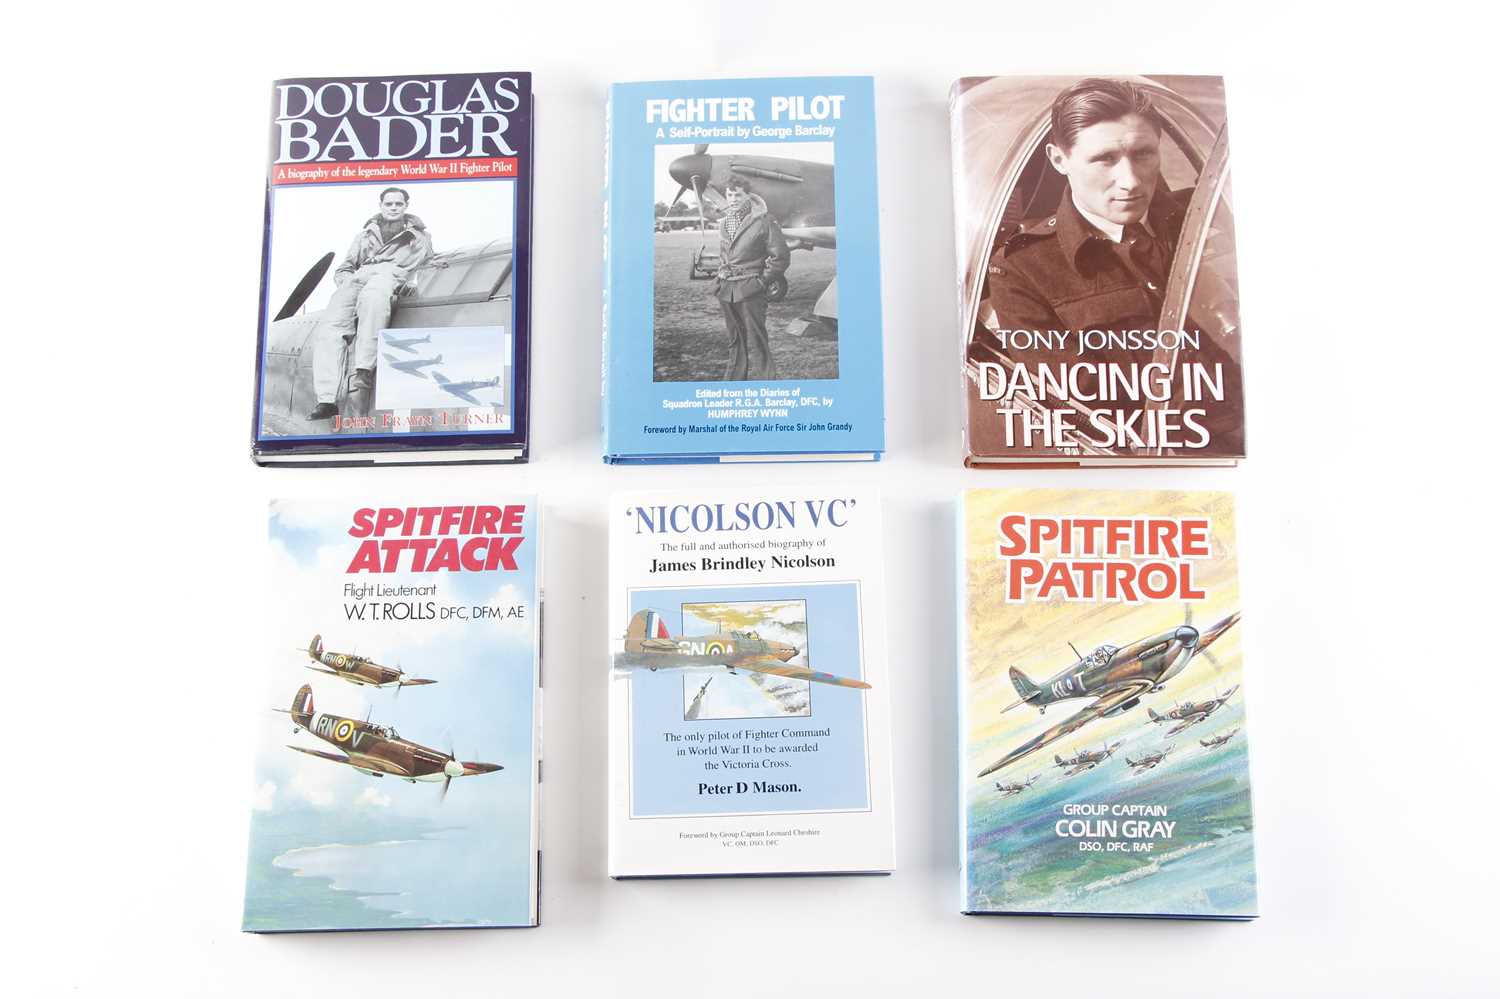 6 Vols: Douglas Bader, Biography Of The Legendary WWII Fighter Pilot by John Frayn Turner; Fighter